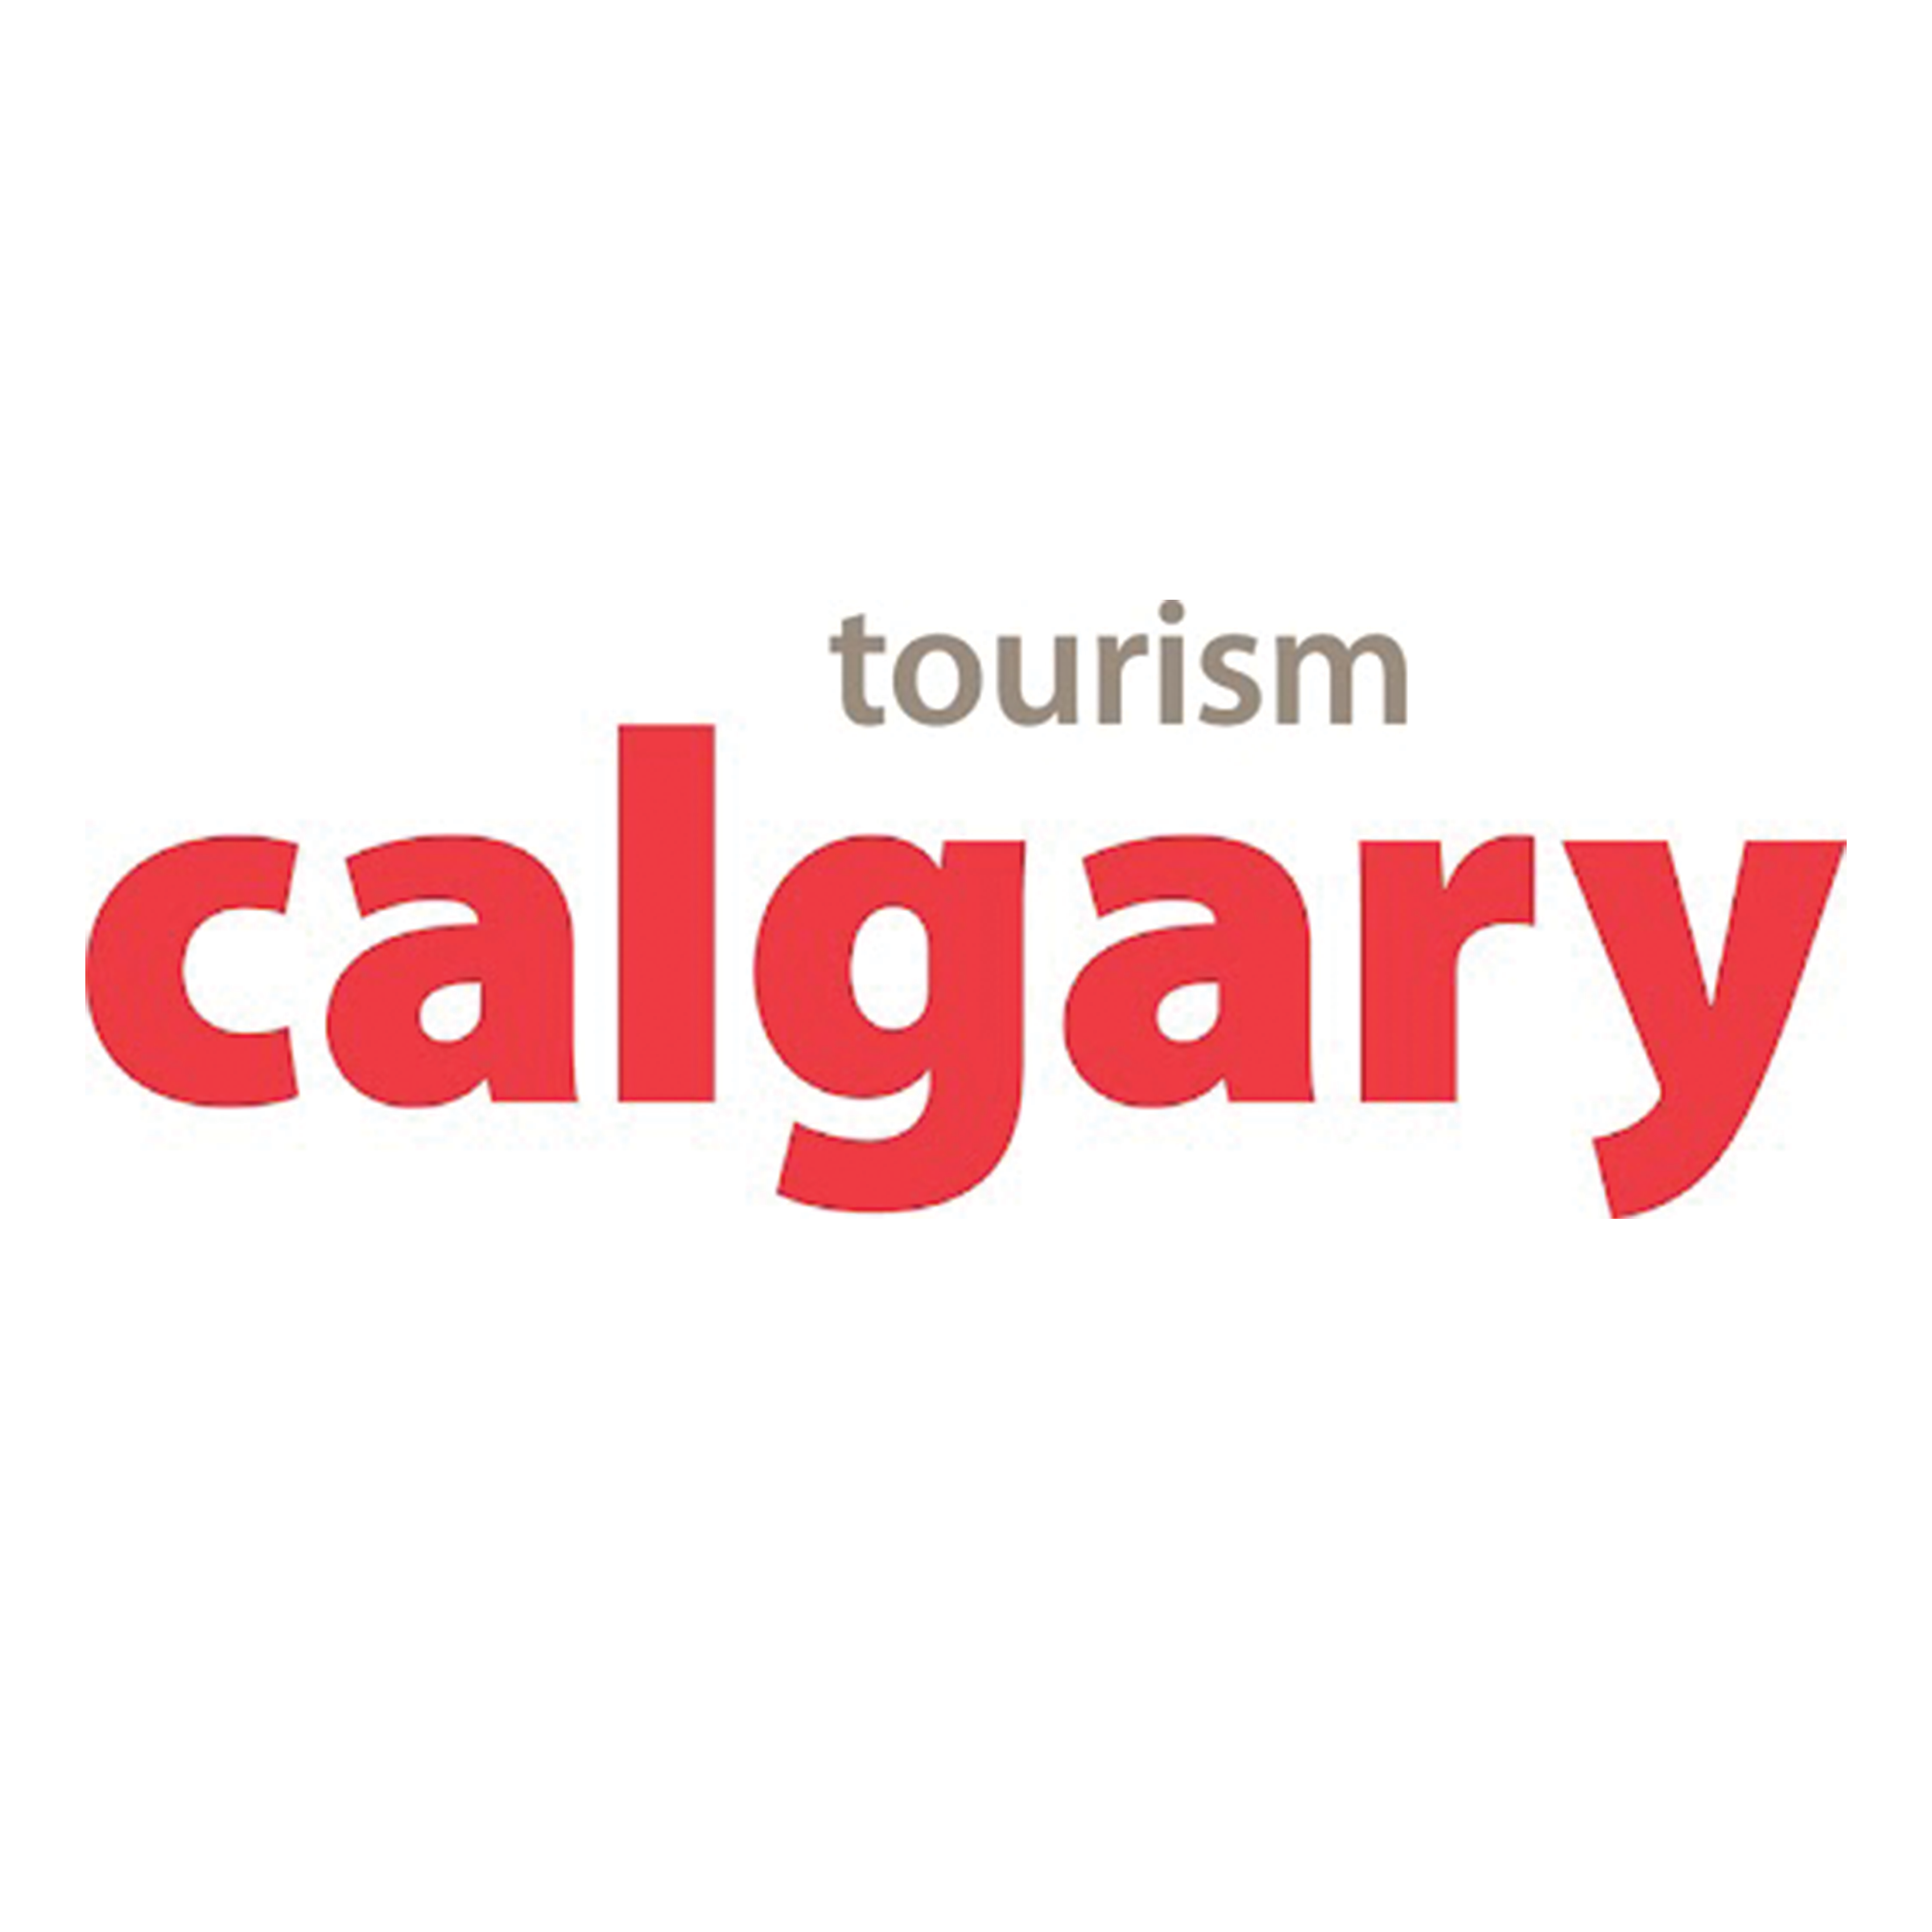 Calgary tourism sponsor wodil world leadership diversity conference